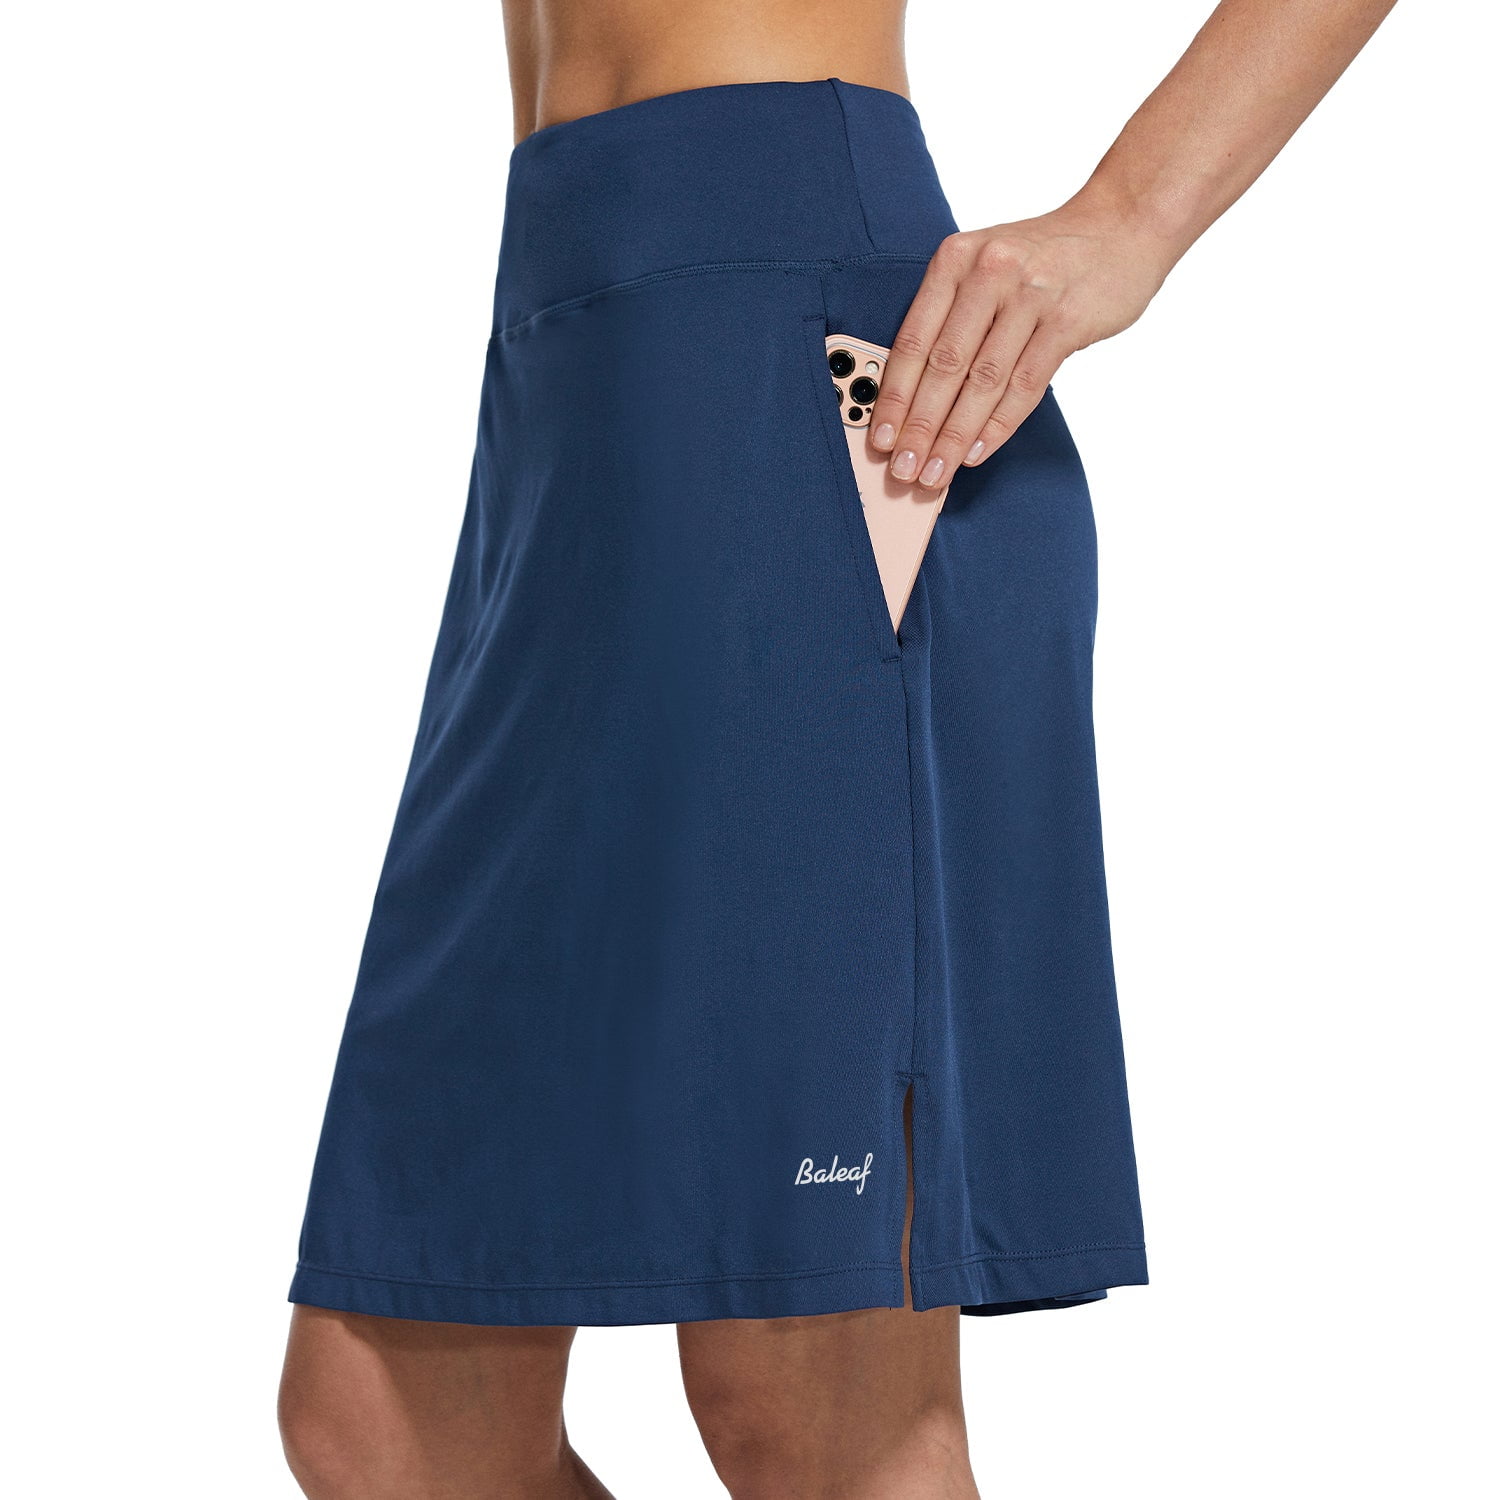 BALEAF Women's Tennis Skirt With Pocket Knee length skorts Athletic ...